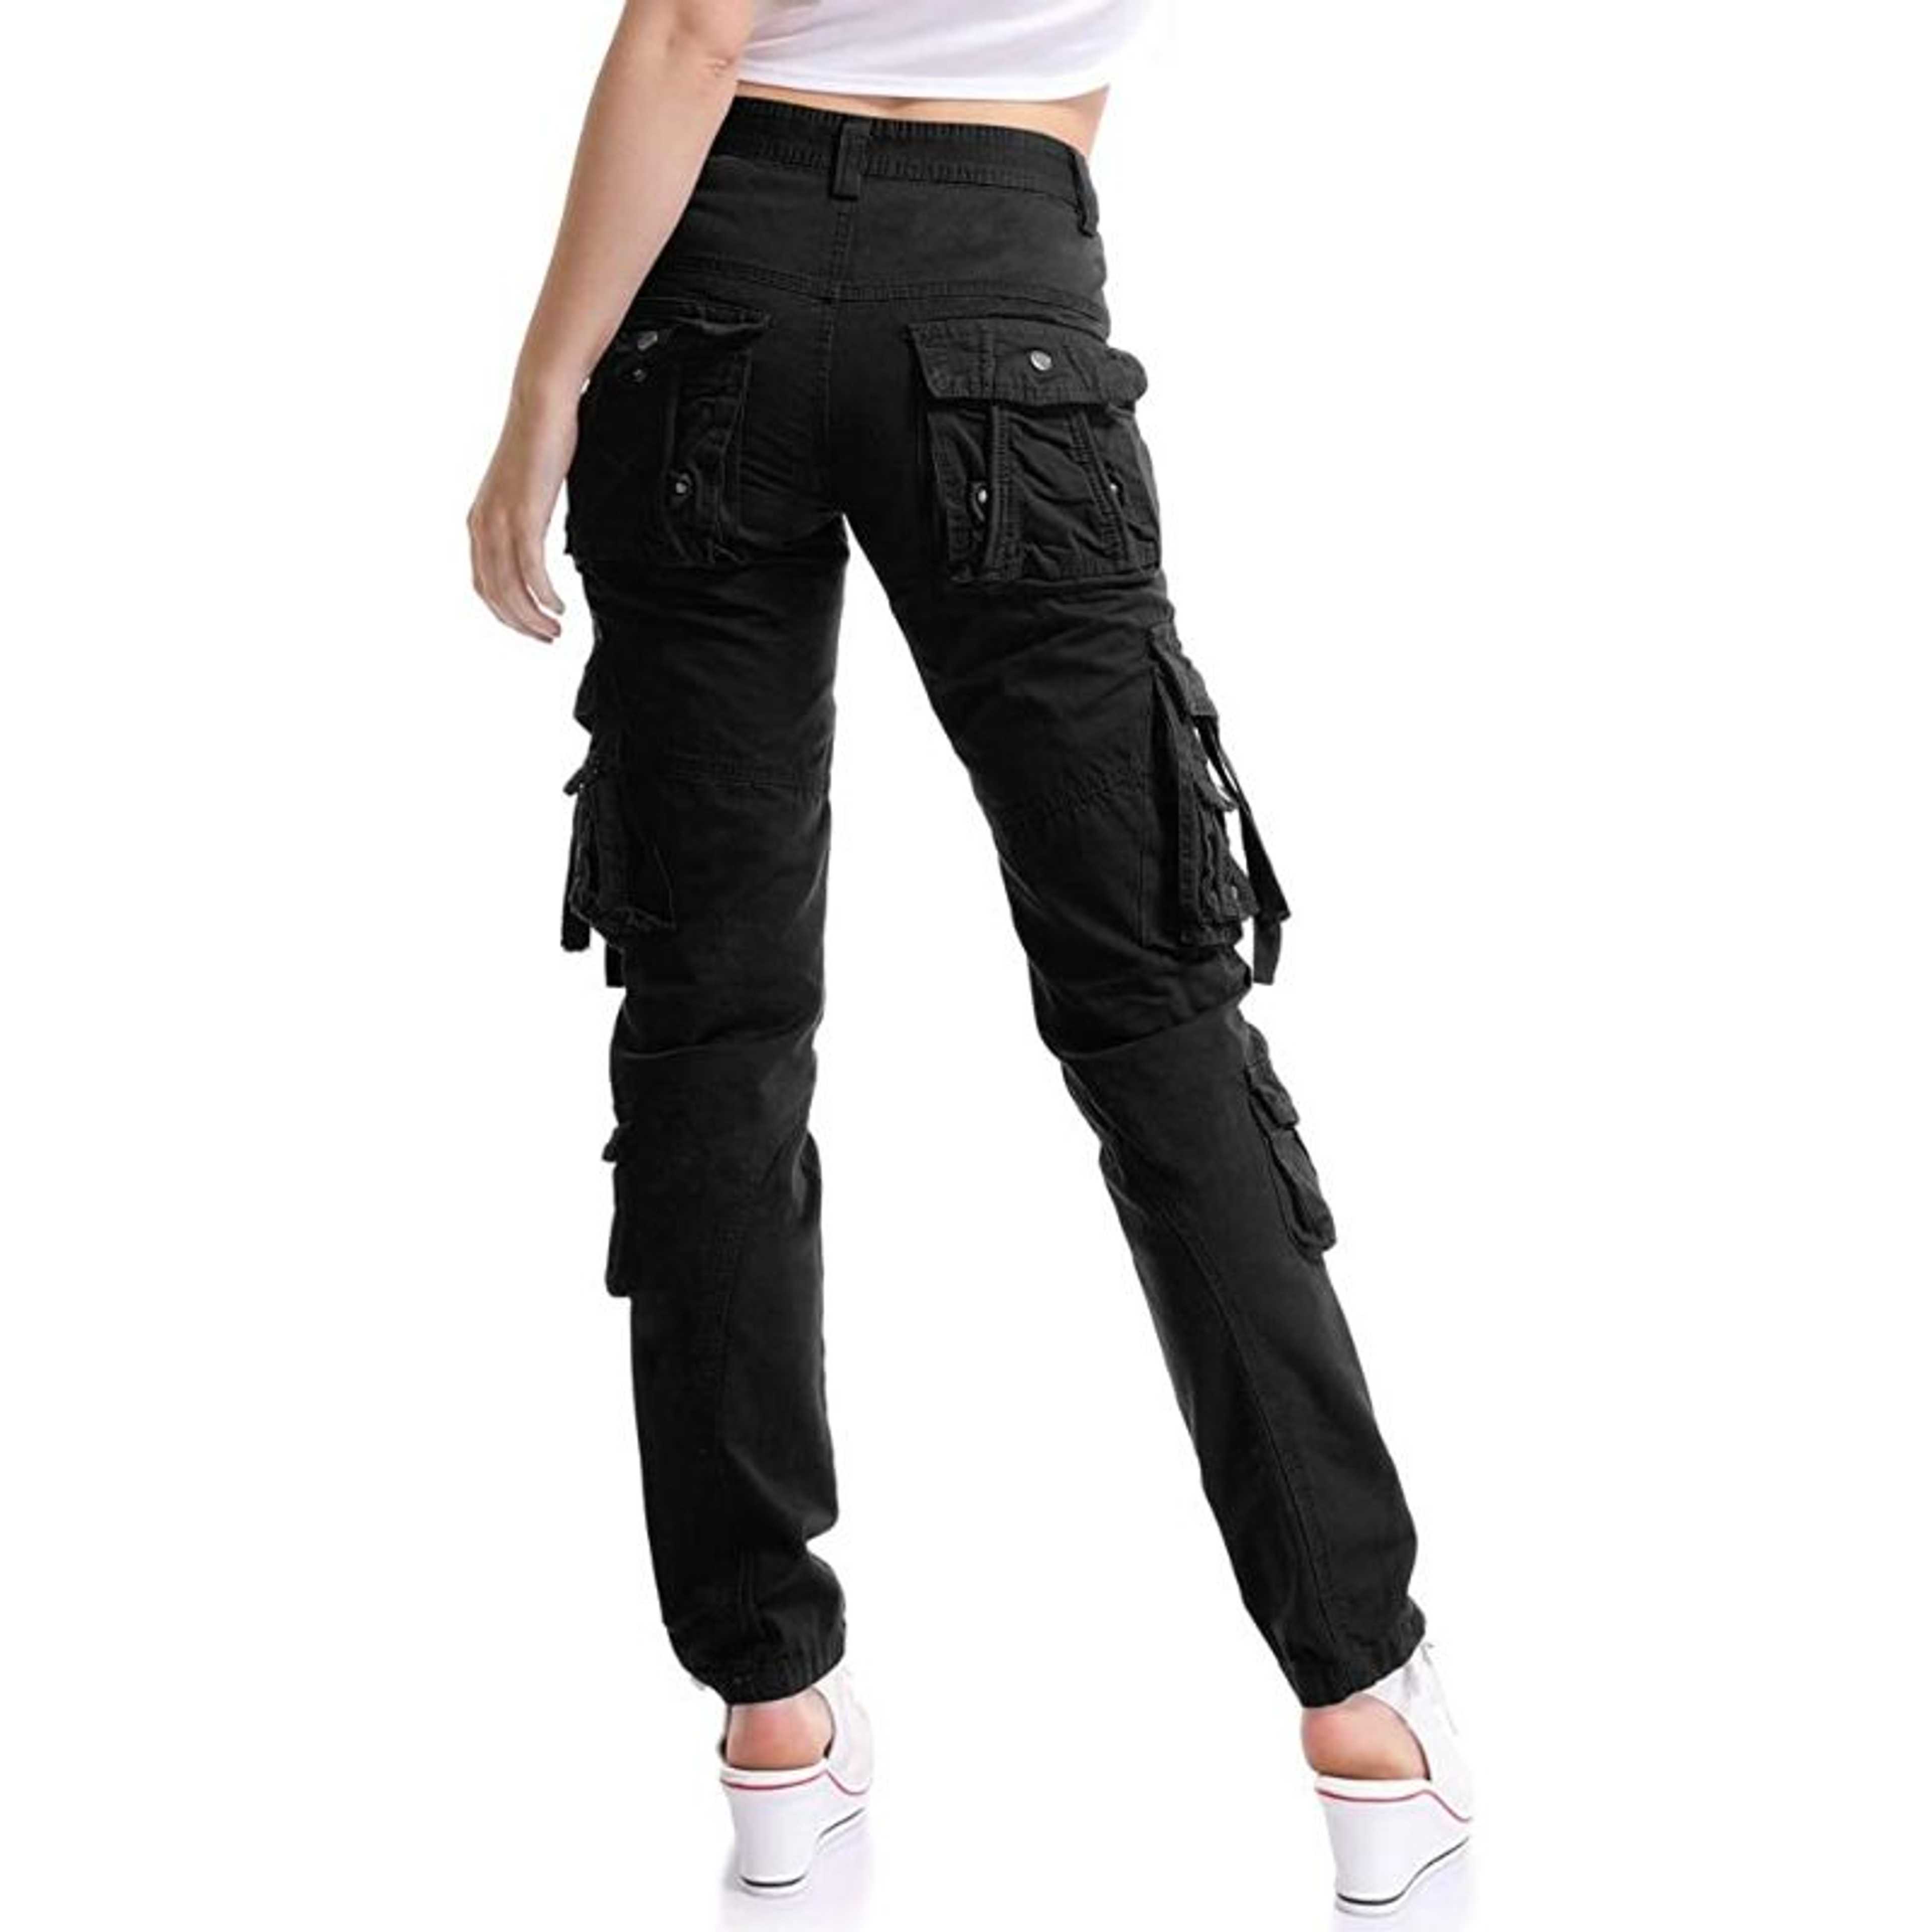 Black Color Rubahas Womens Cargo Trousers Ladies Trousers Jeans Pants